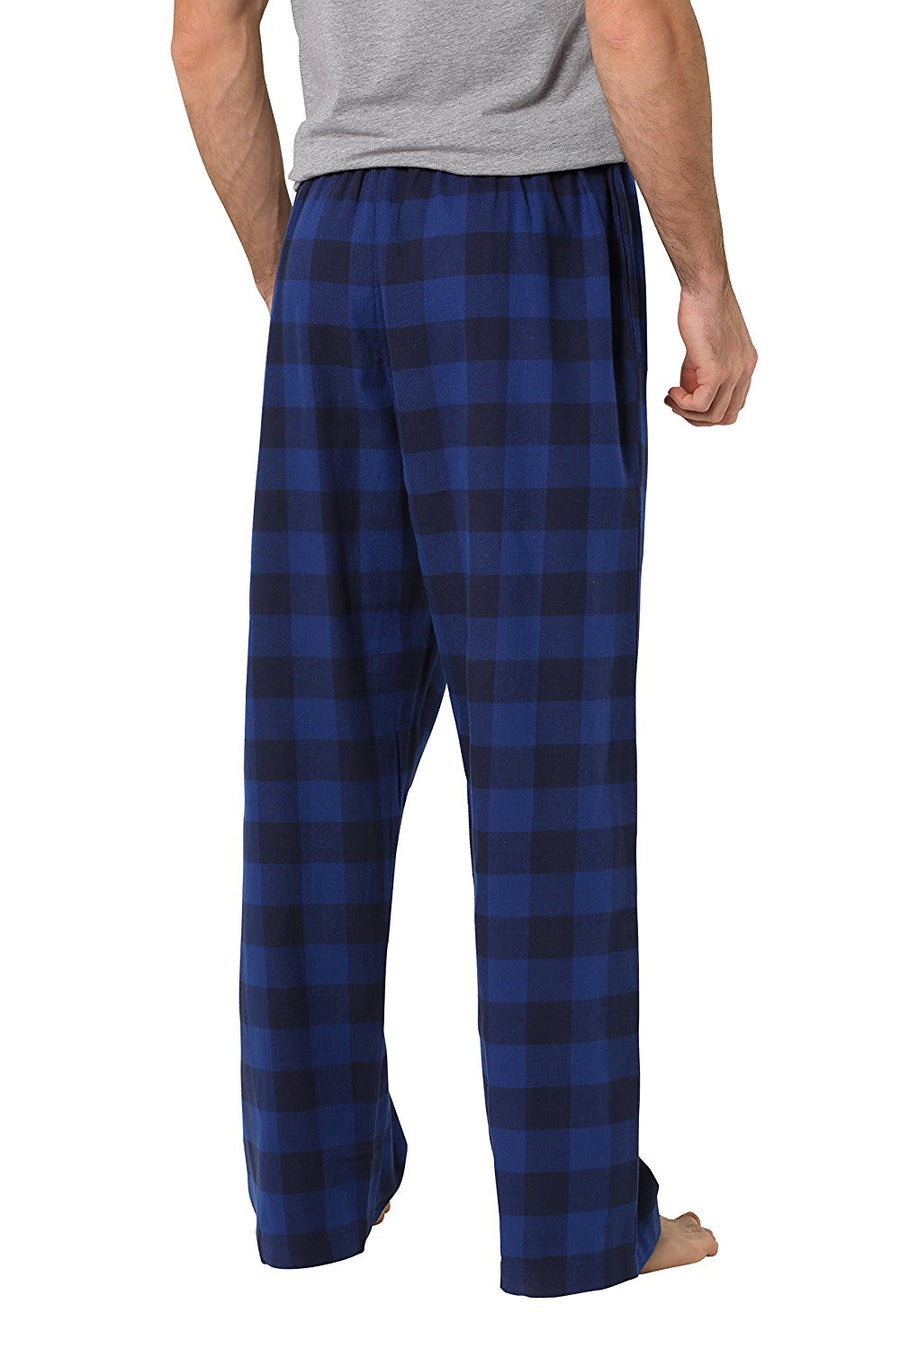 Sigma Delta Tau Flannel Pajama Pants (S 2-6, Columbia Blue) at